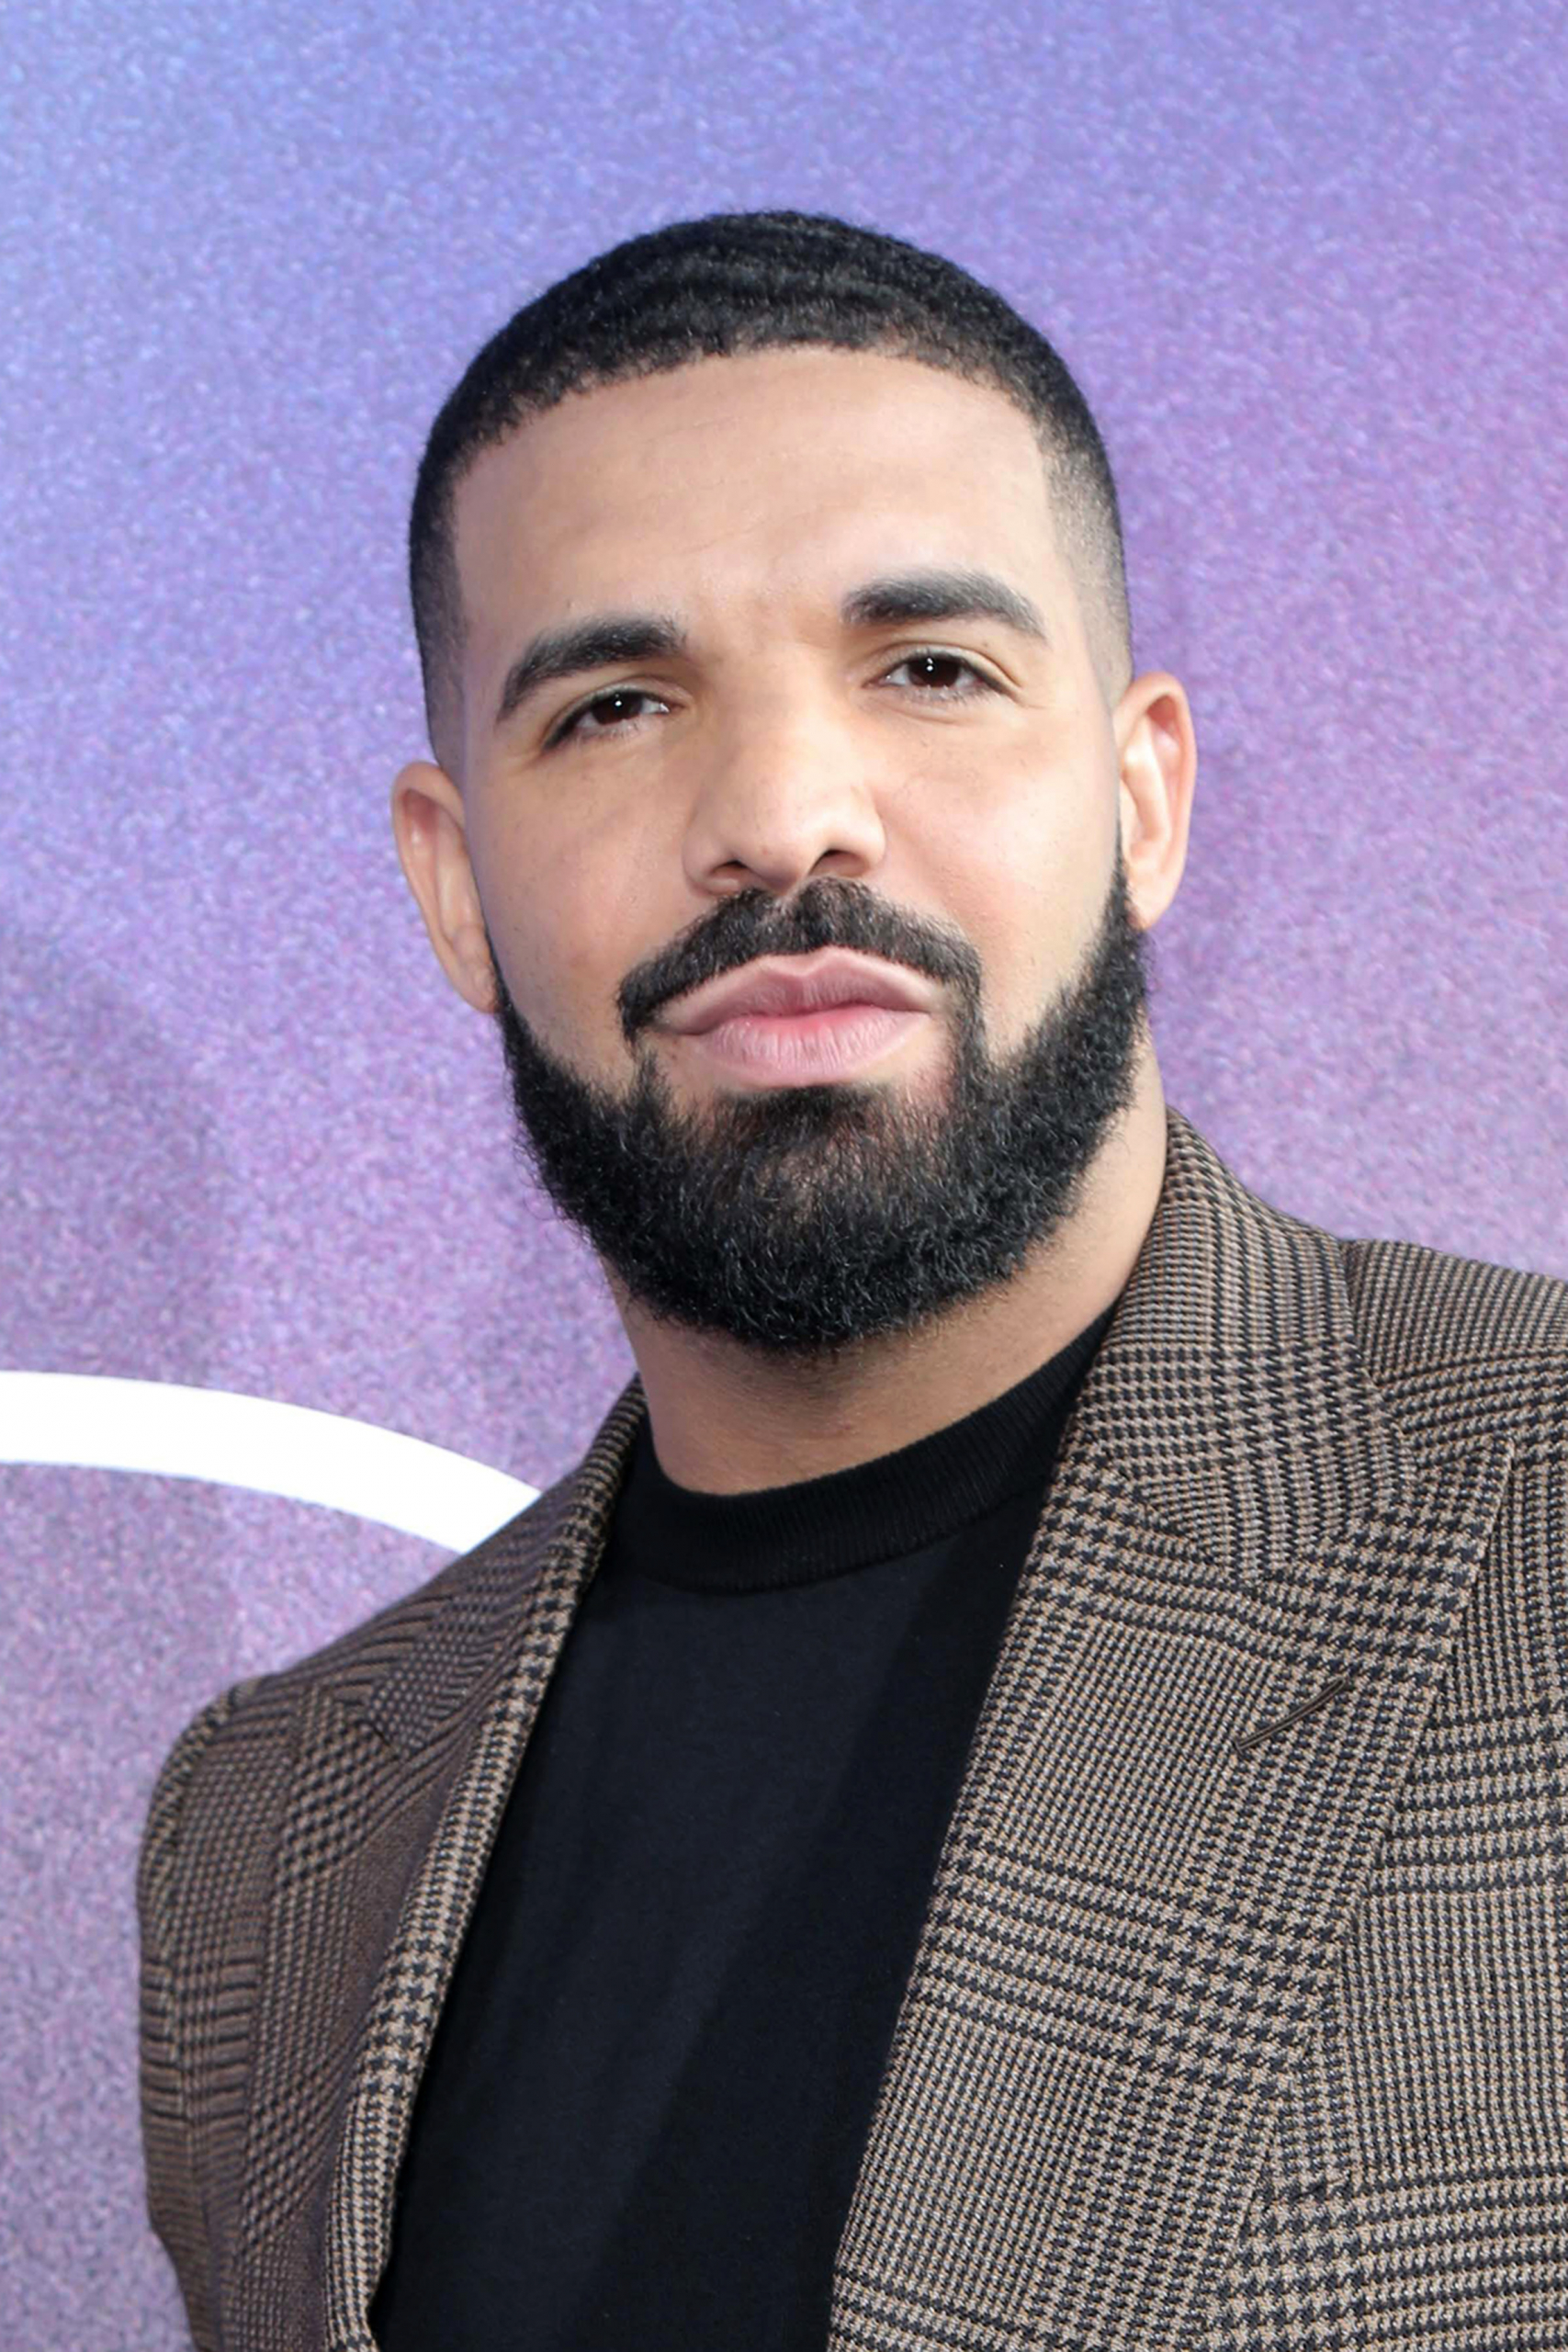 Drake Fires Shots At Kanye West On His “Certified Lover Boy” Album!